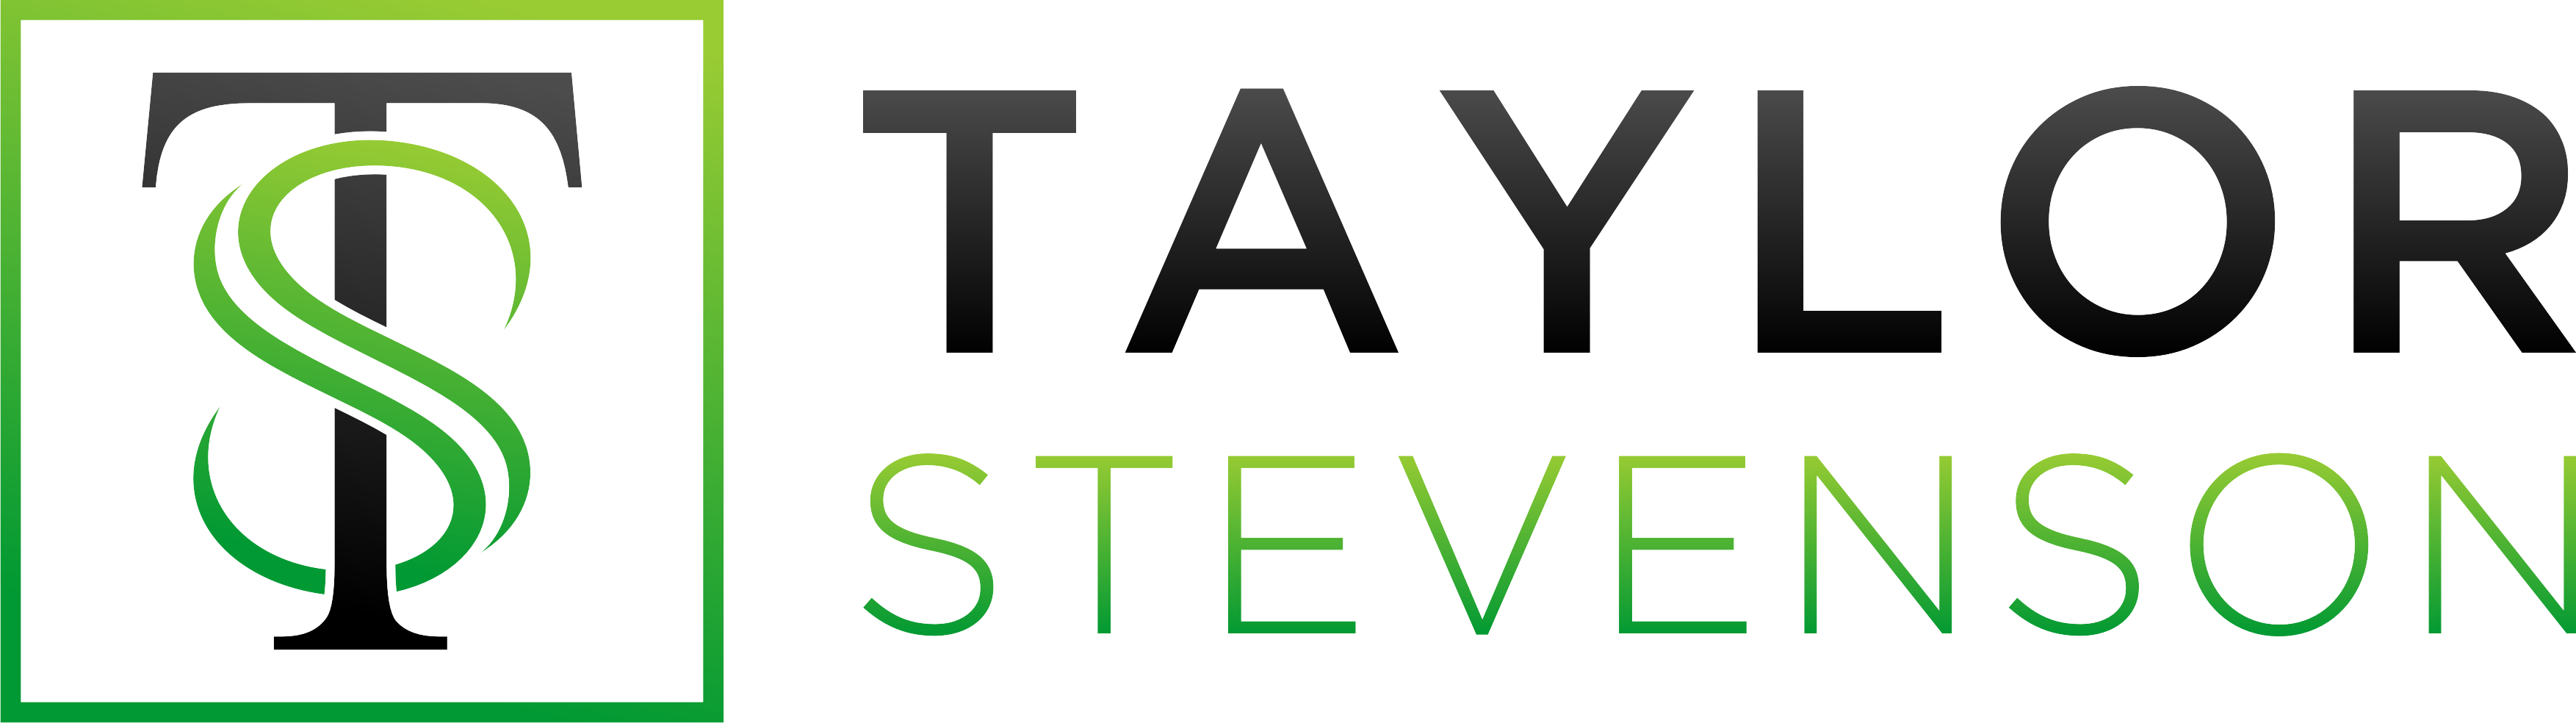 Taylor Stevenson Logo